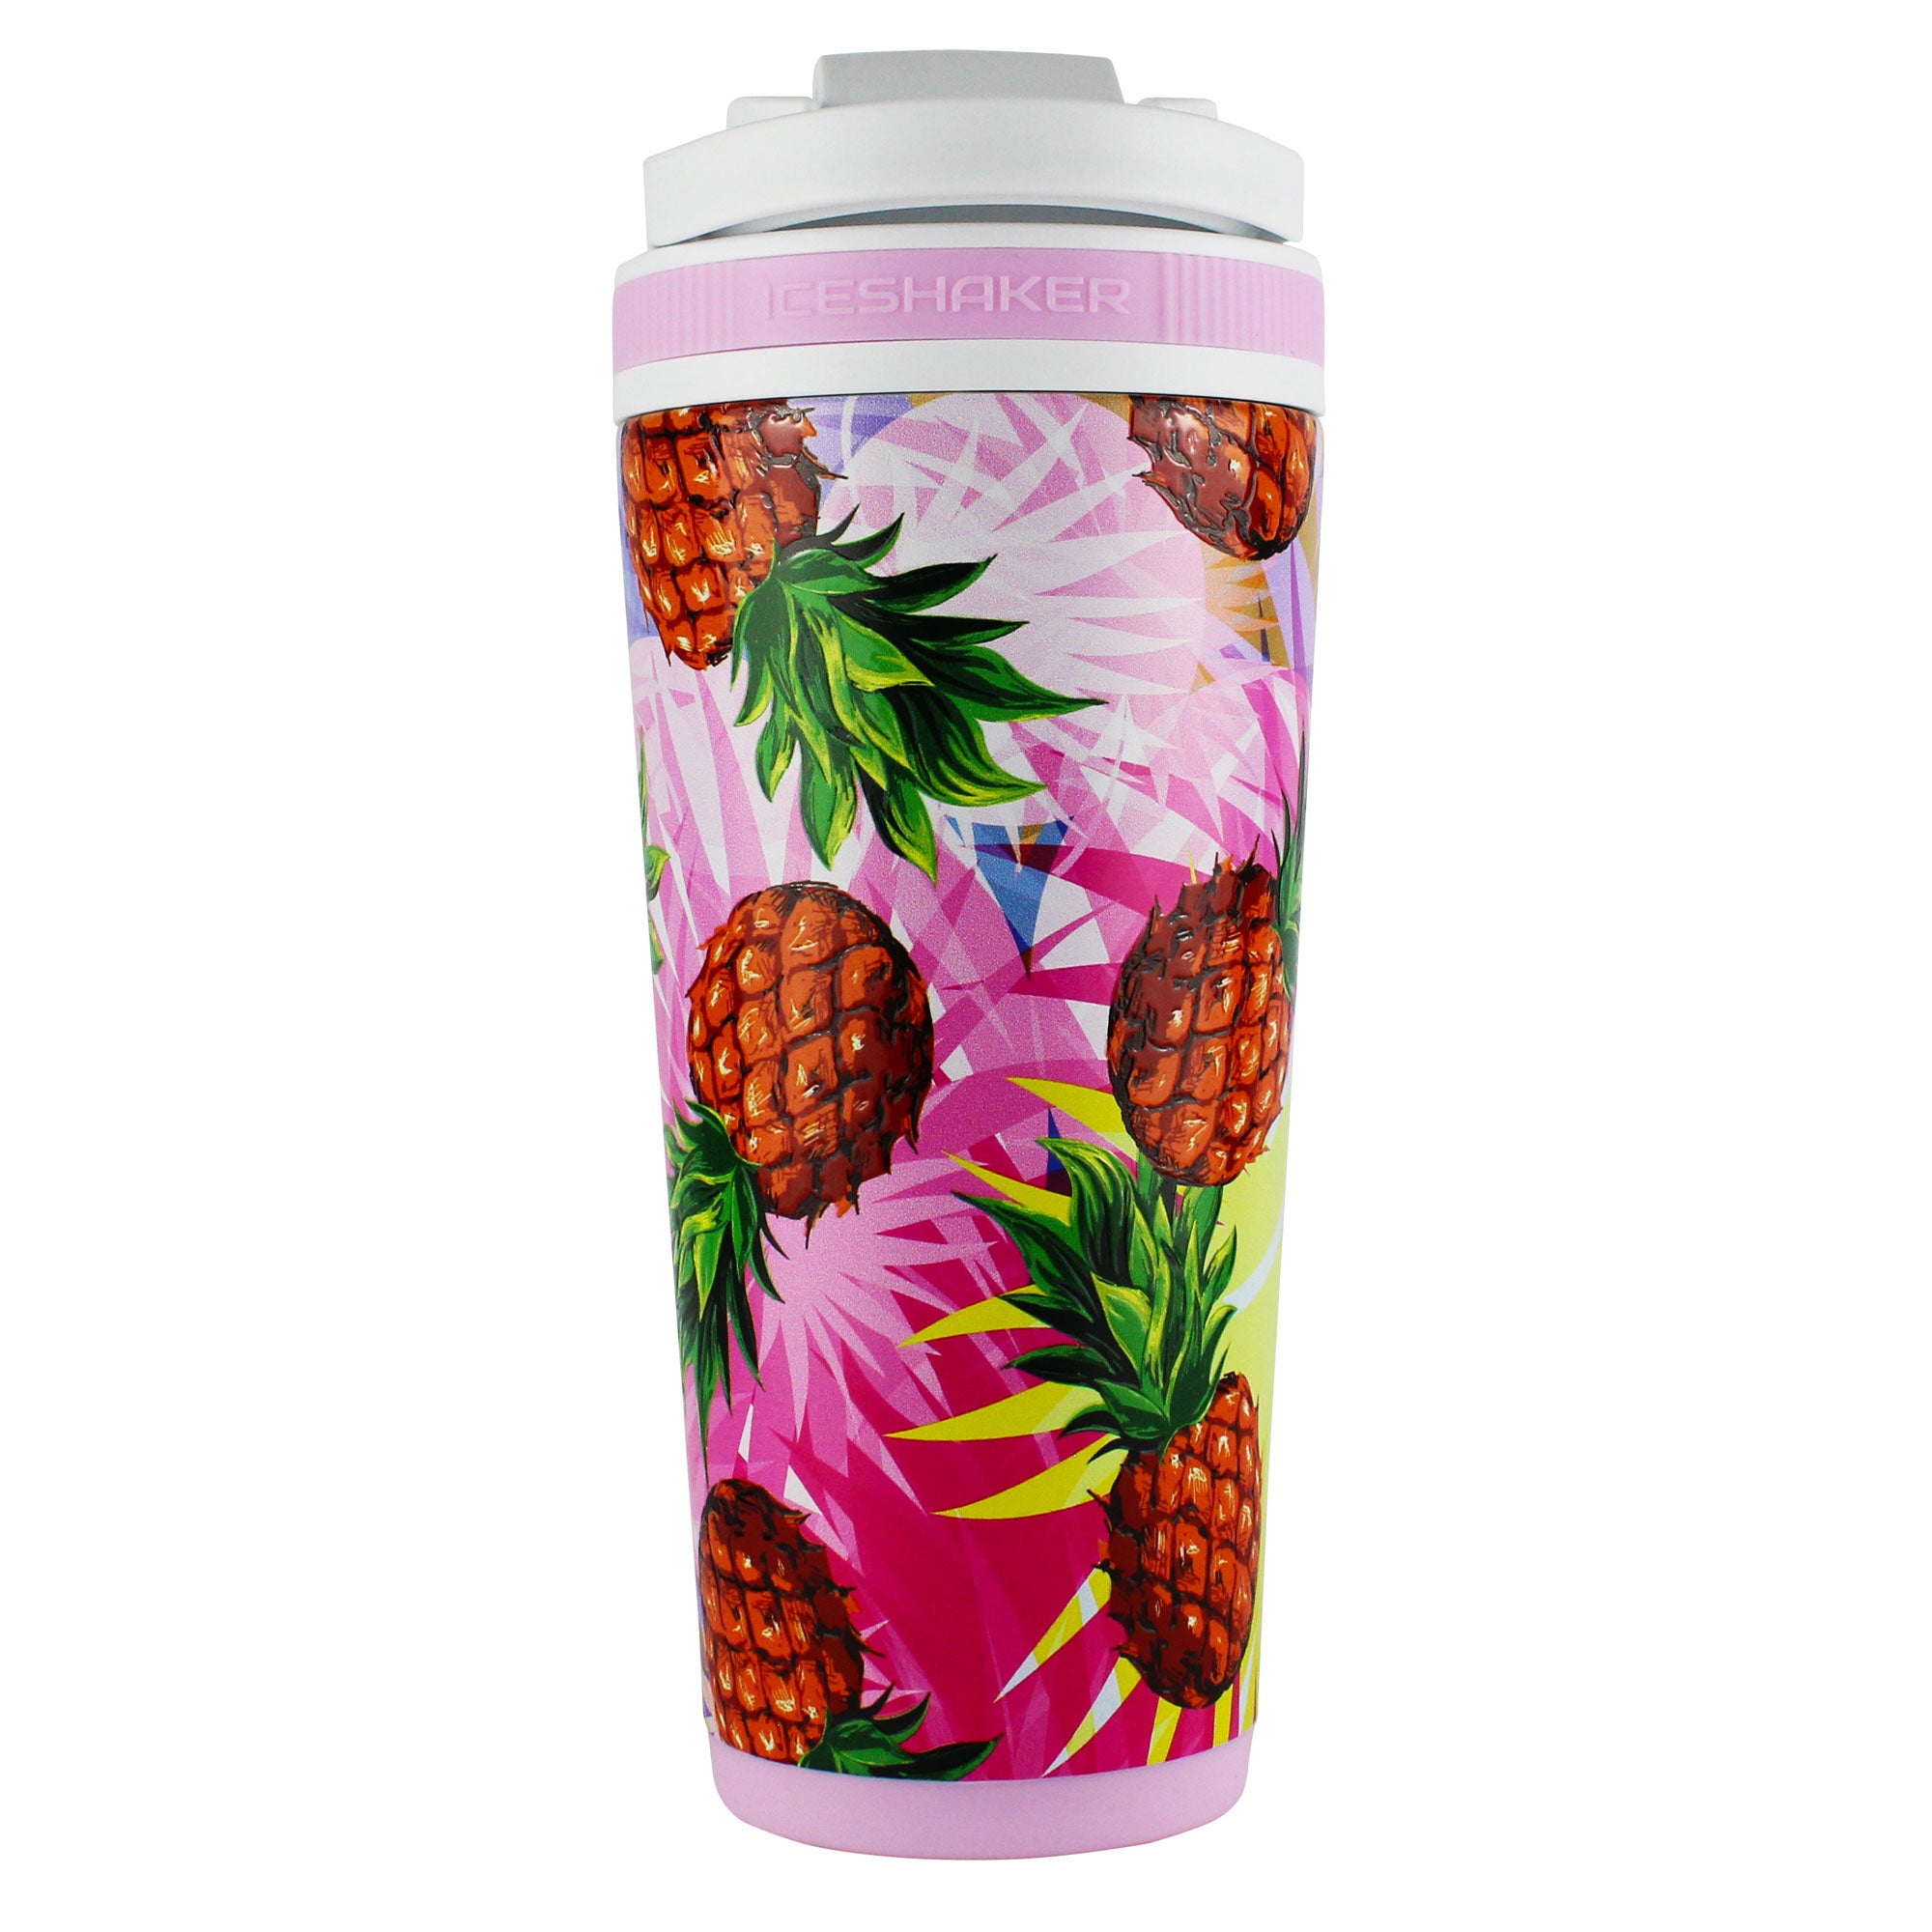 26oz Ice Shaker - Pineapple